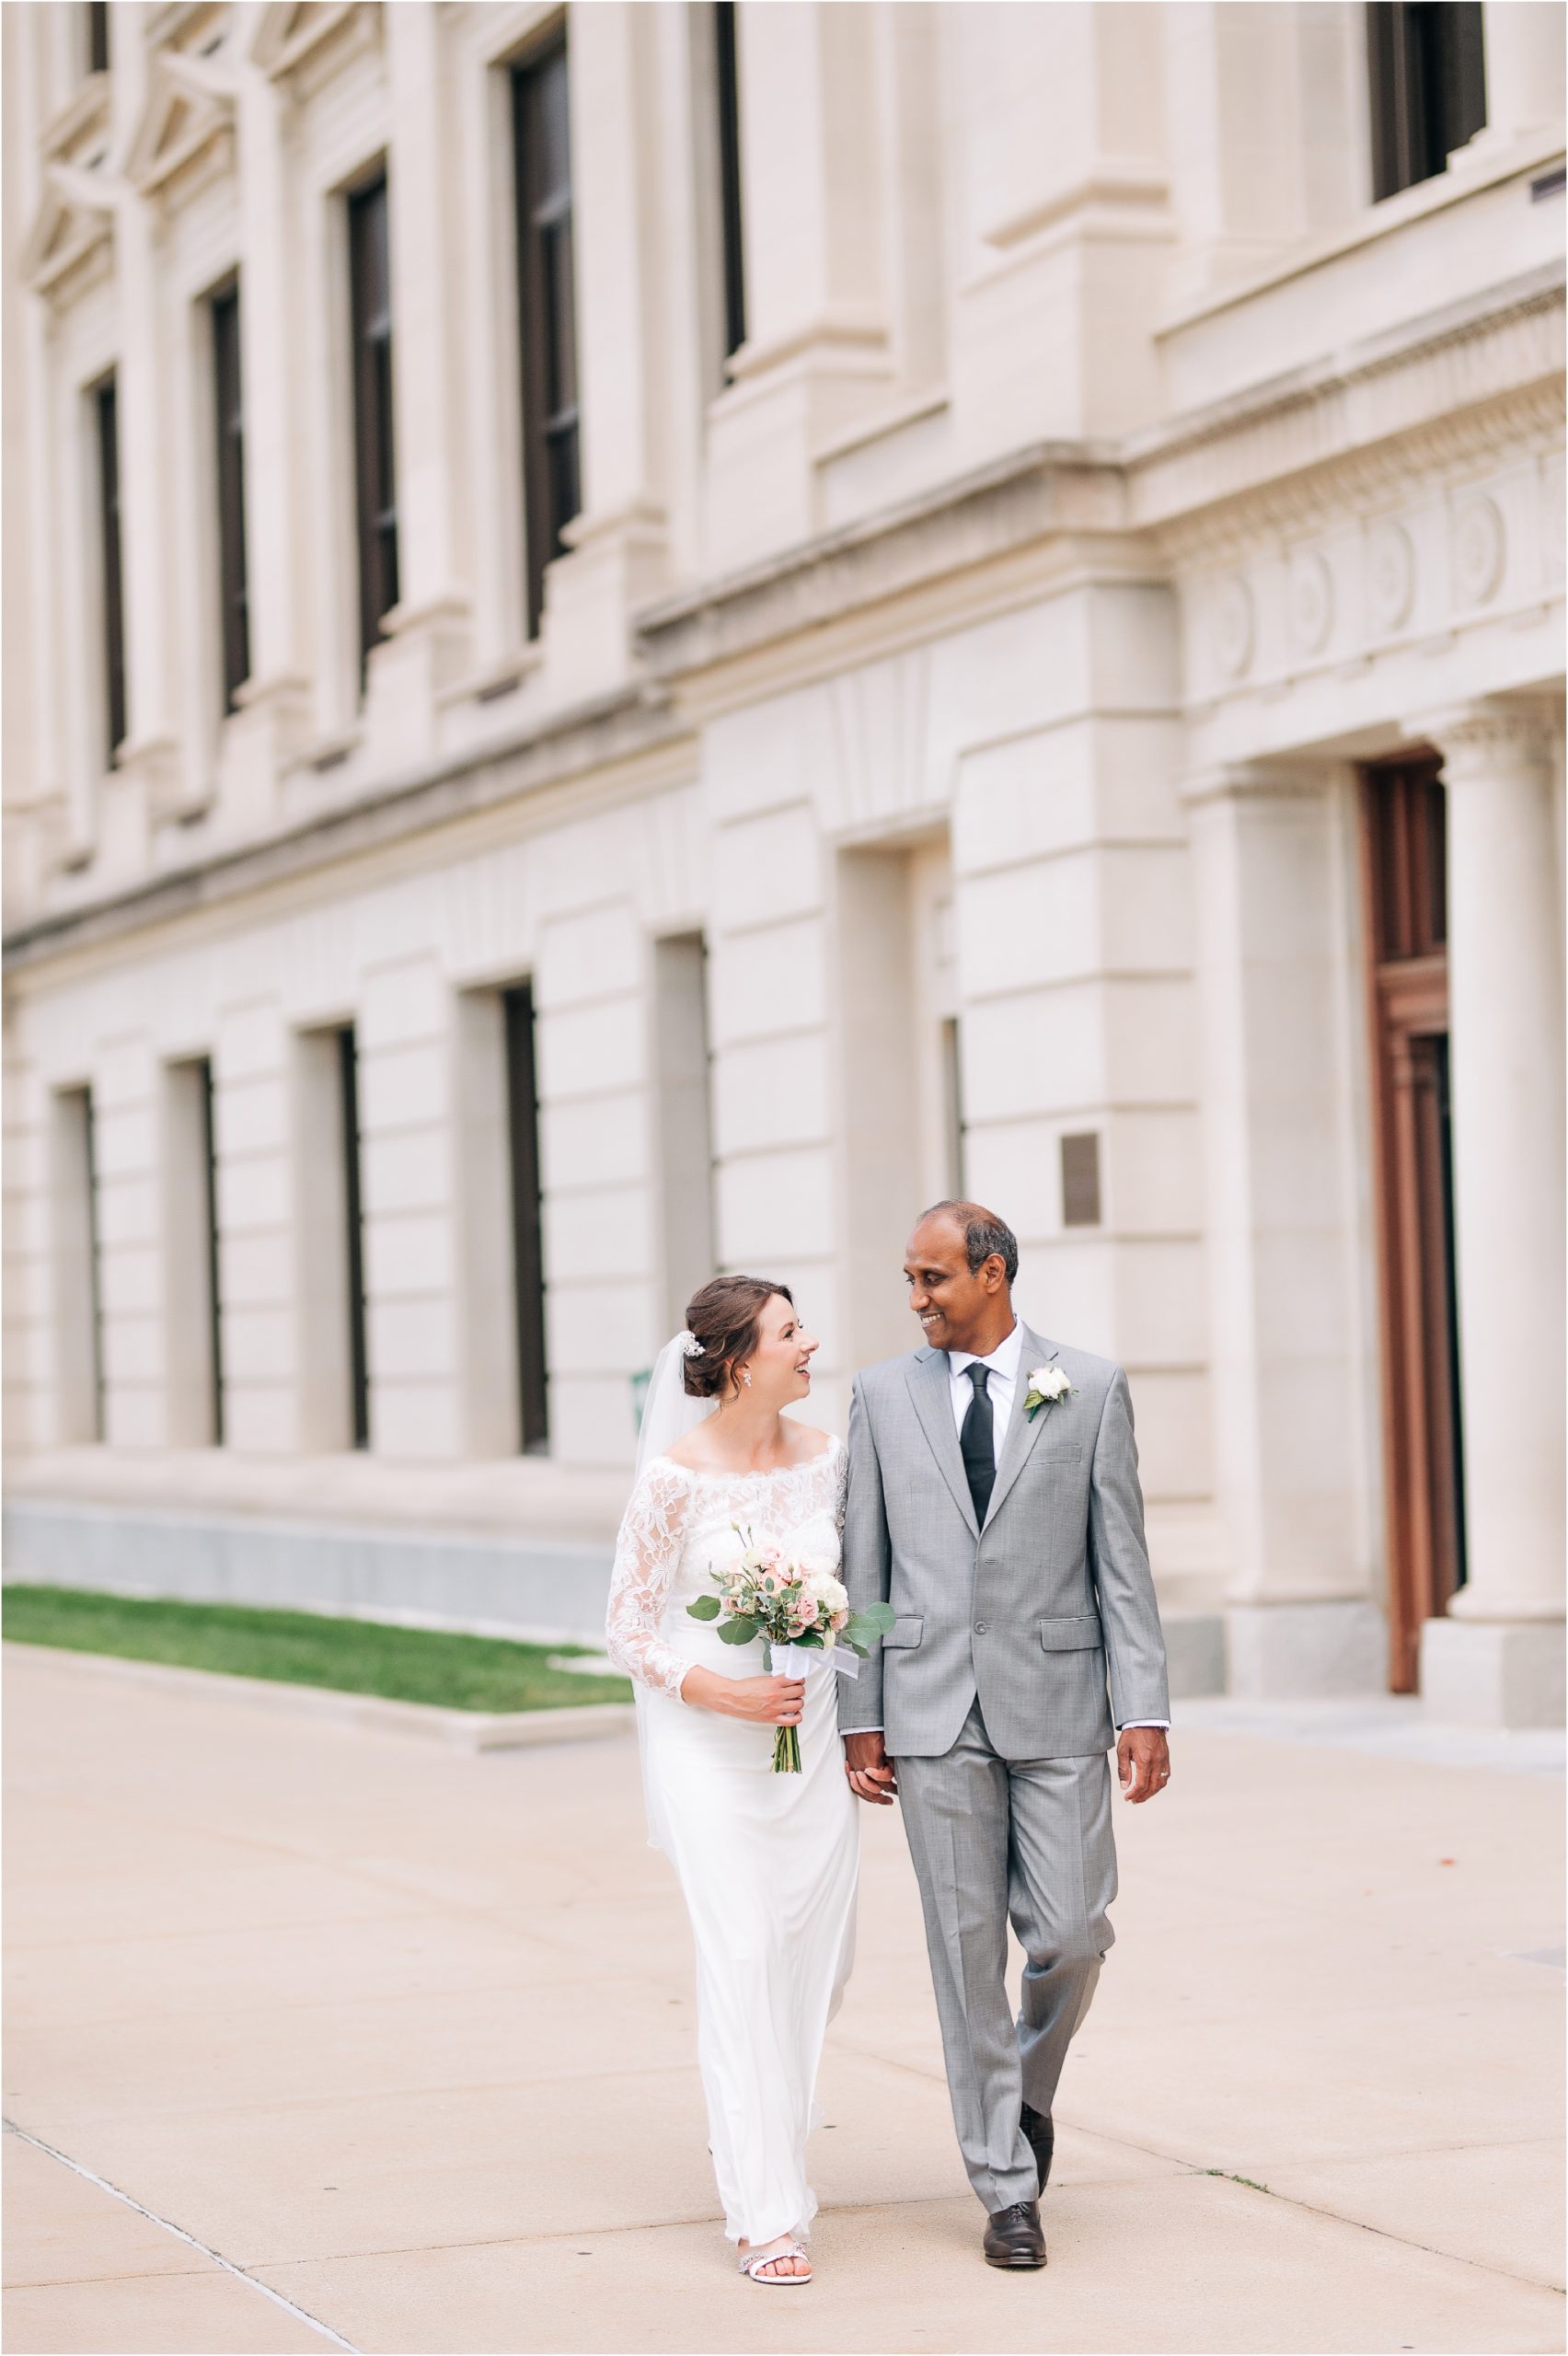 Allen County Court house wedding day photos